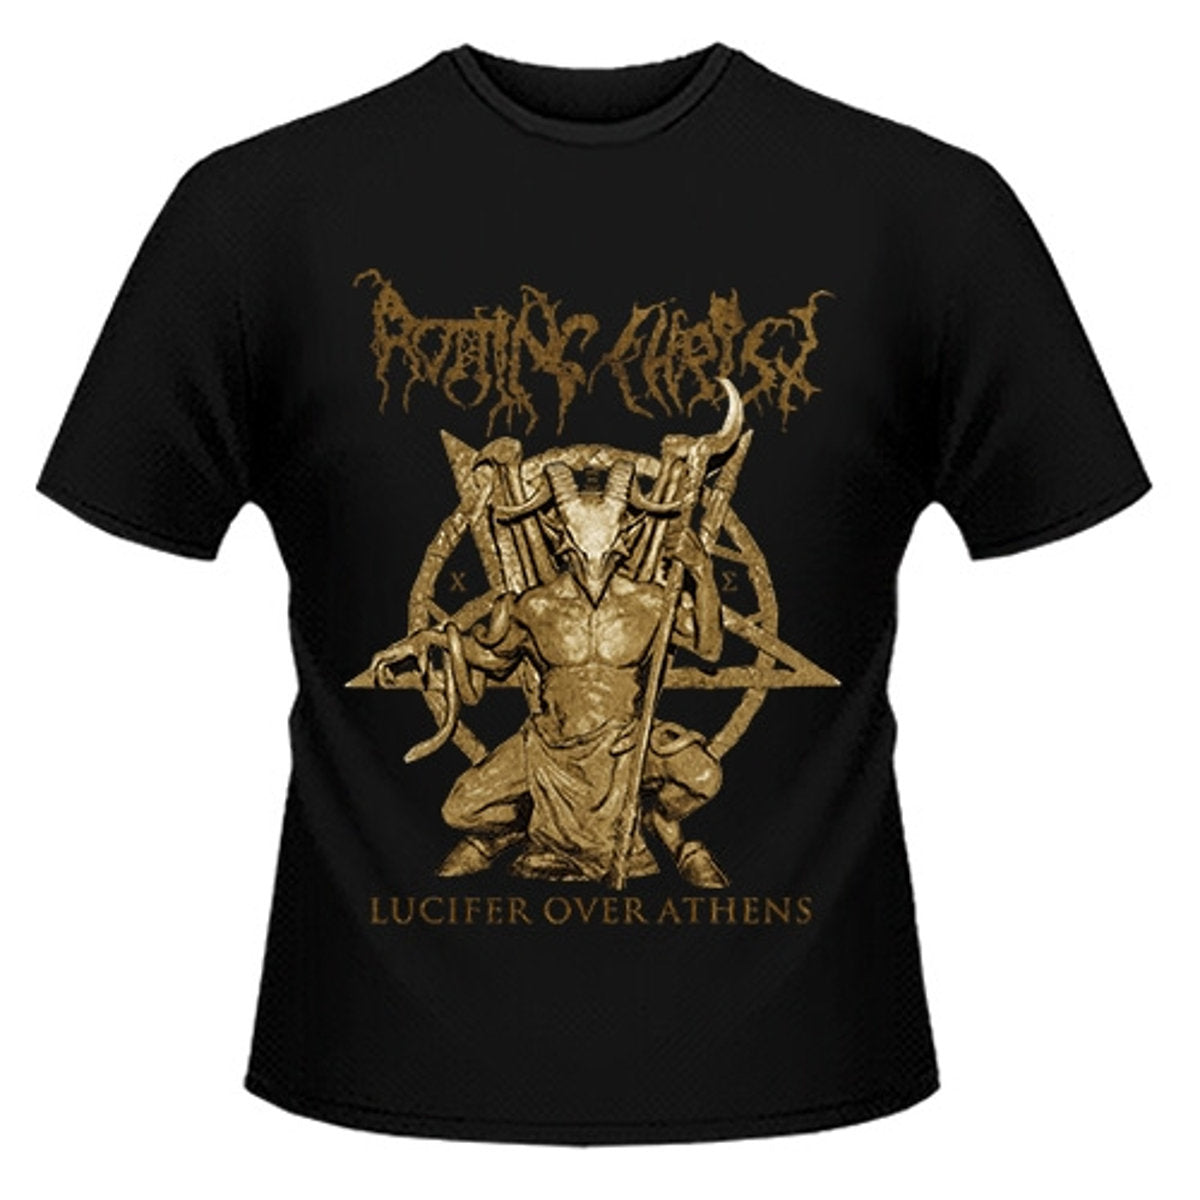 Rotting Christ "Lucifer Over Athens" T shirt